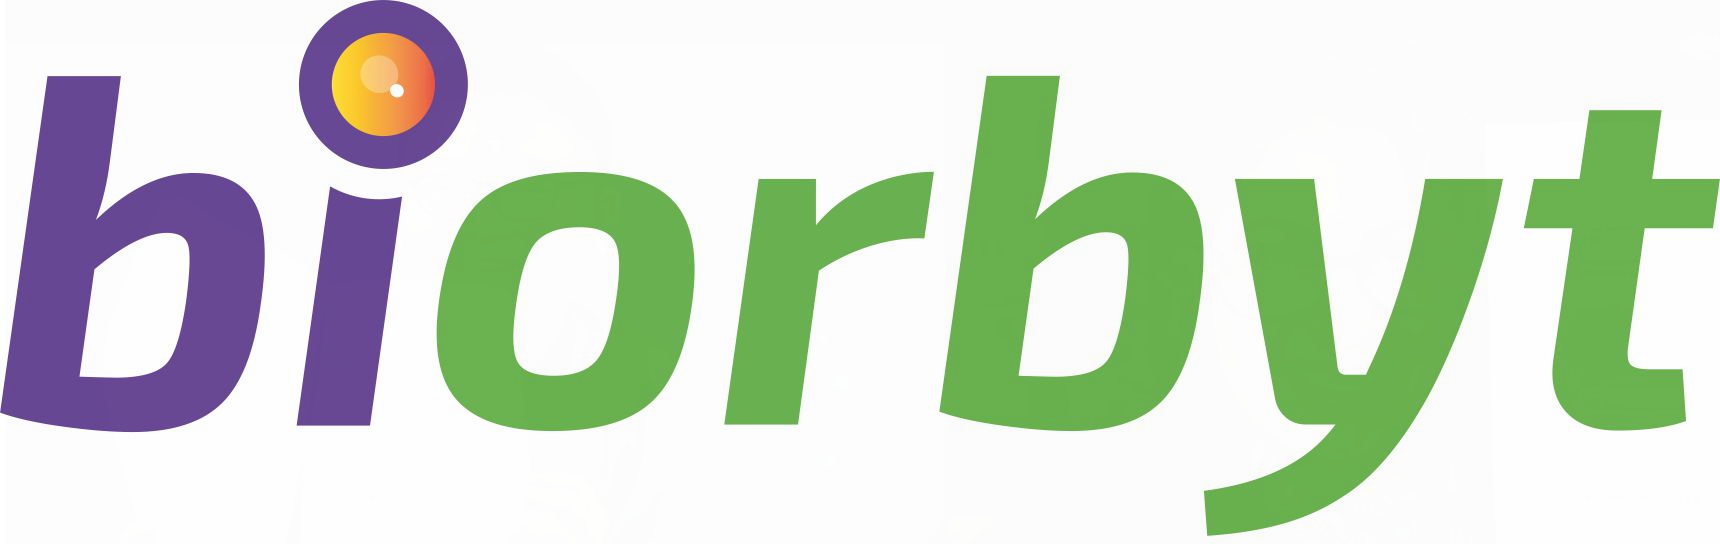 biorbyt-high-res-logo-leai-strapline